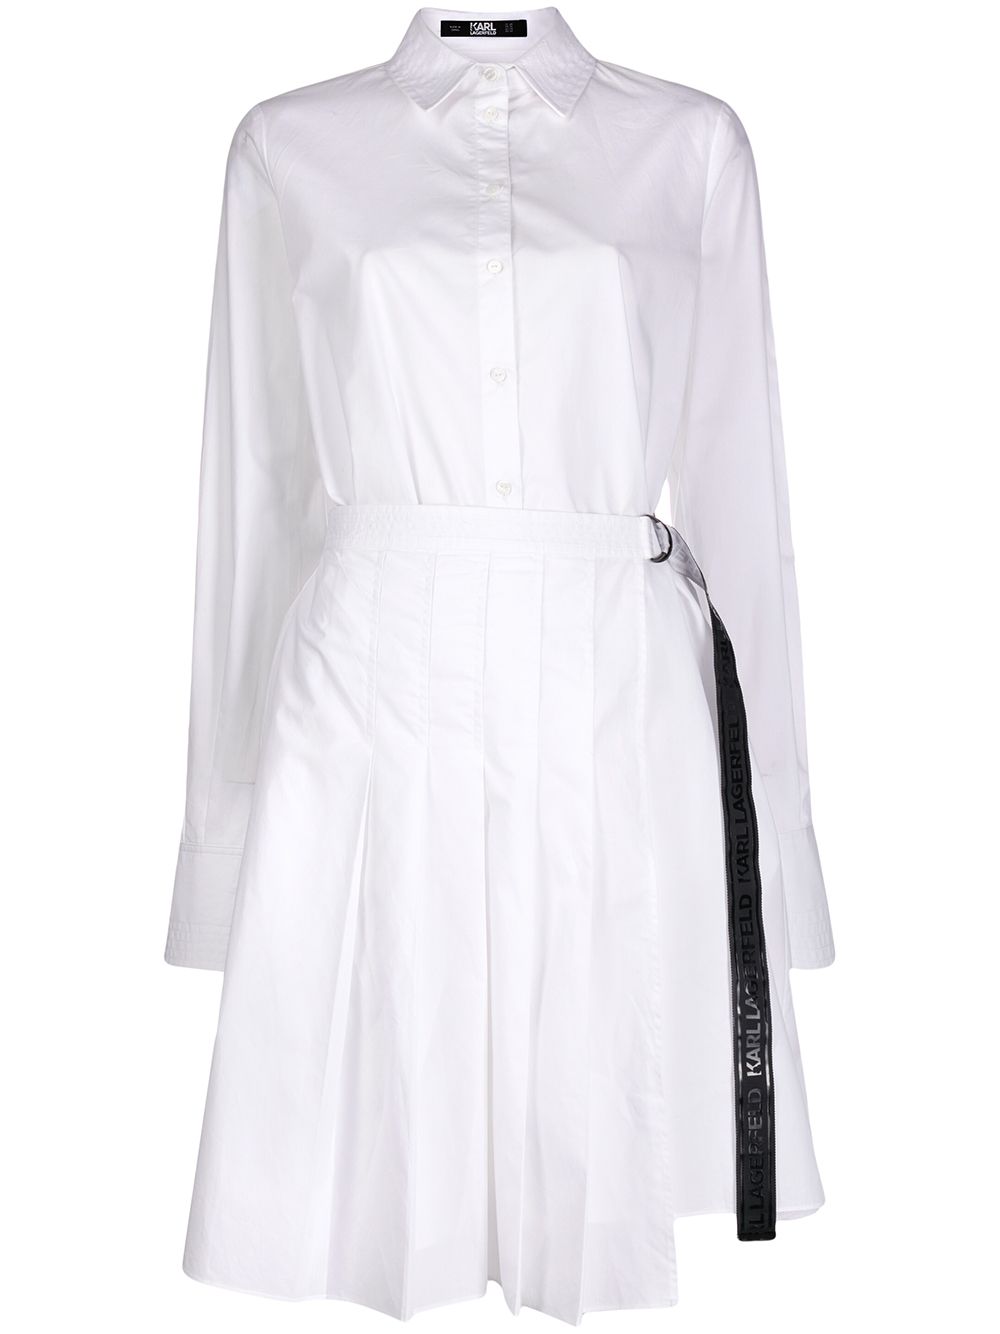 karl lagerfeld white dress